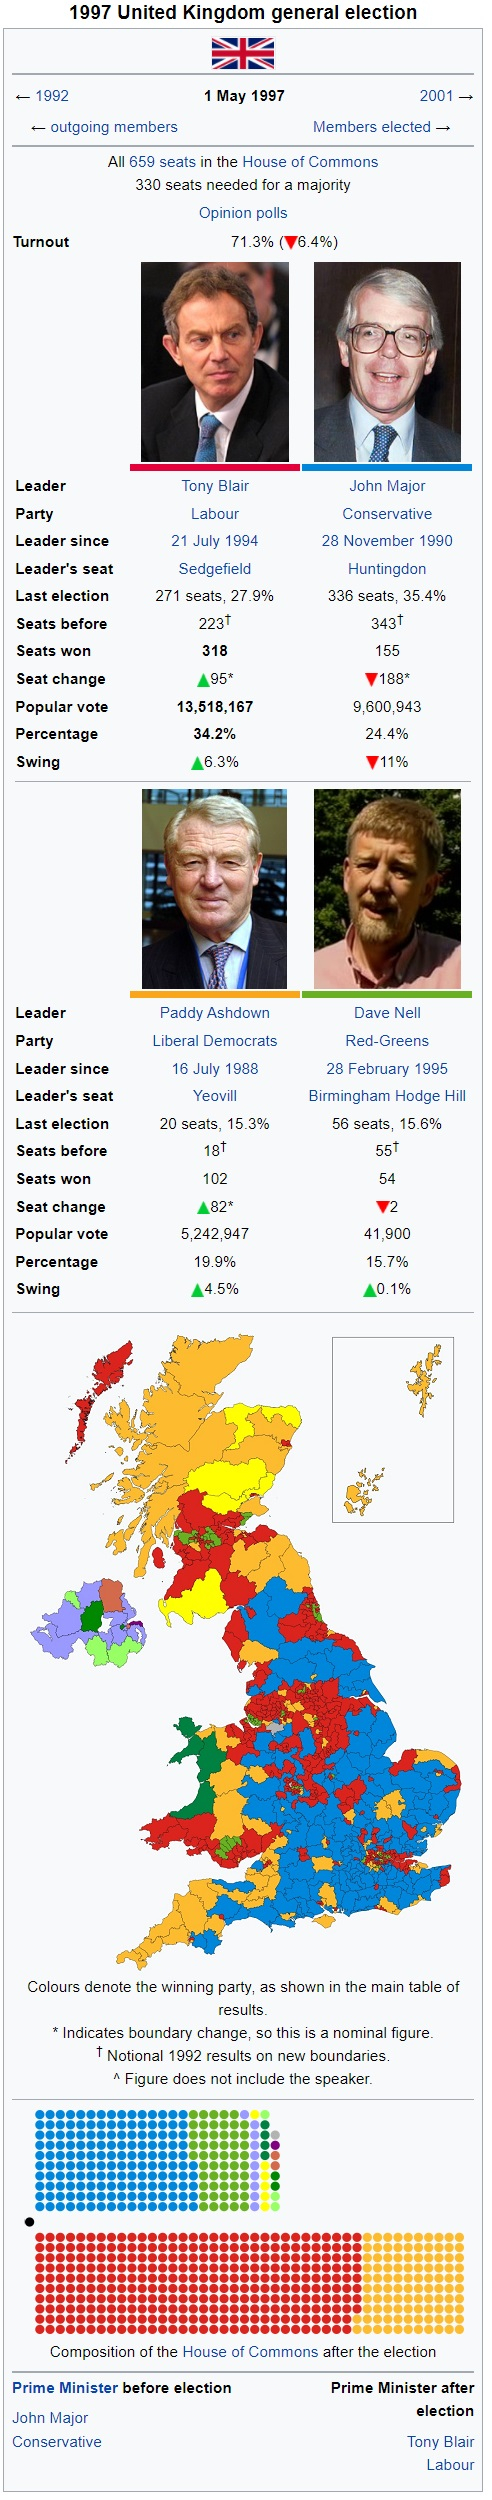 1997 uk election ib.jpg